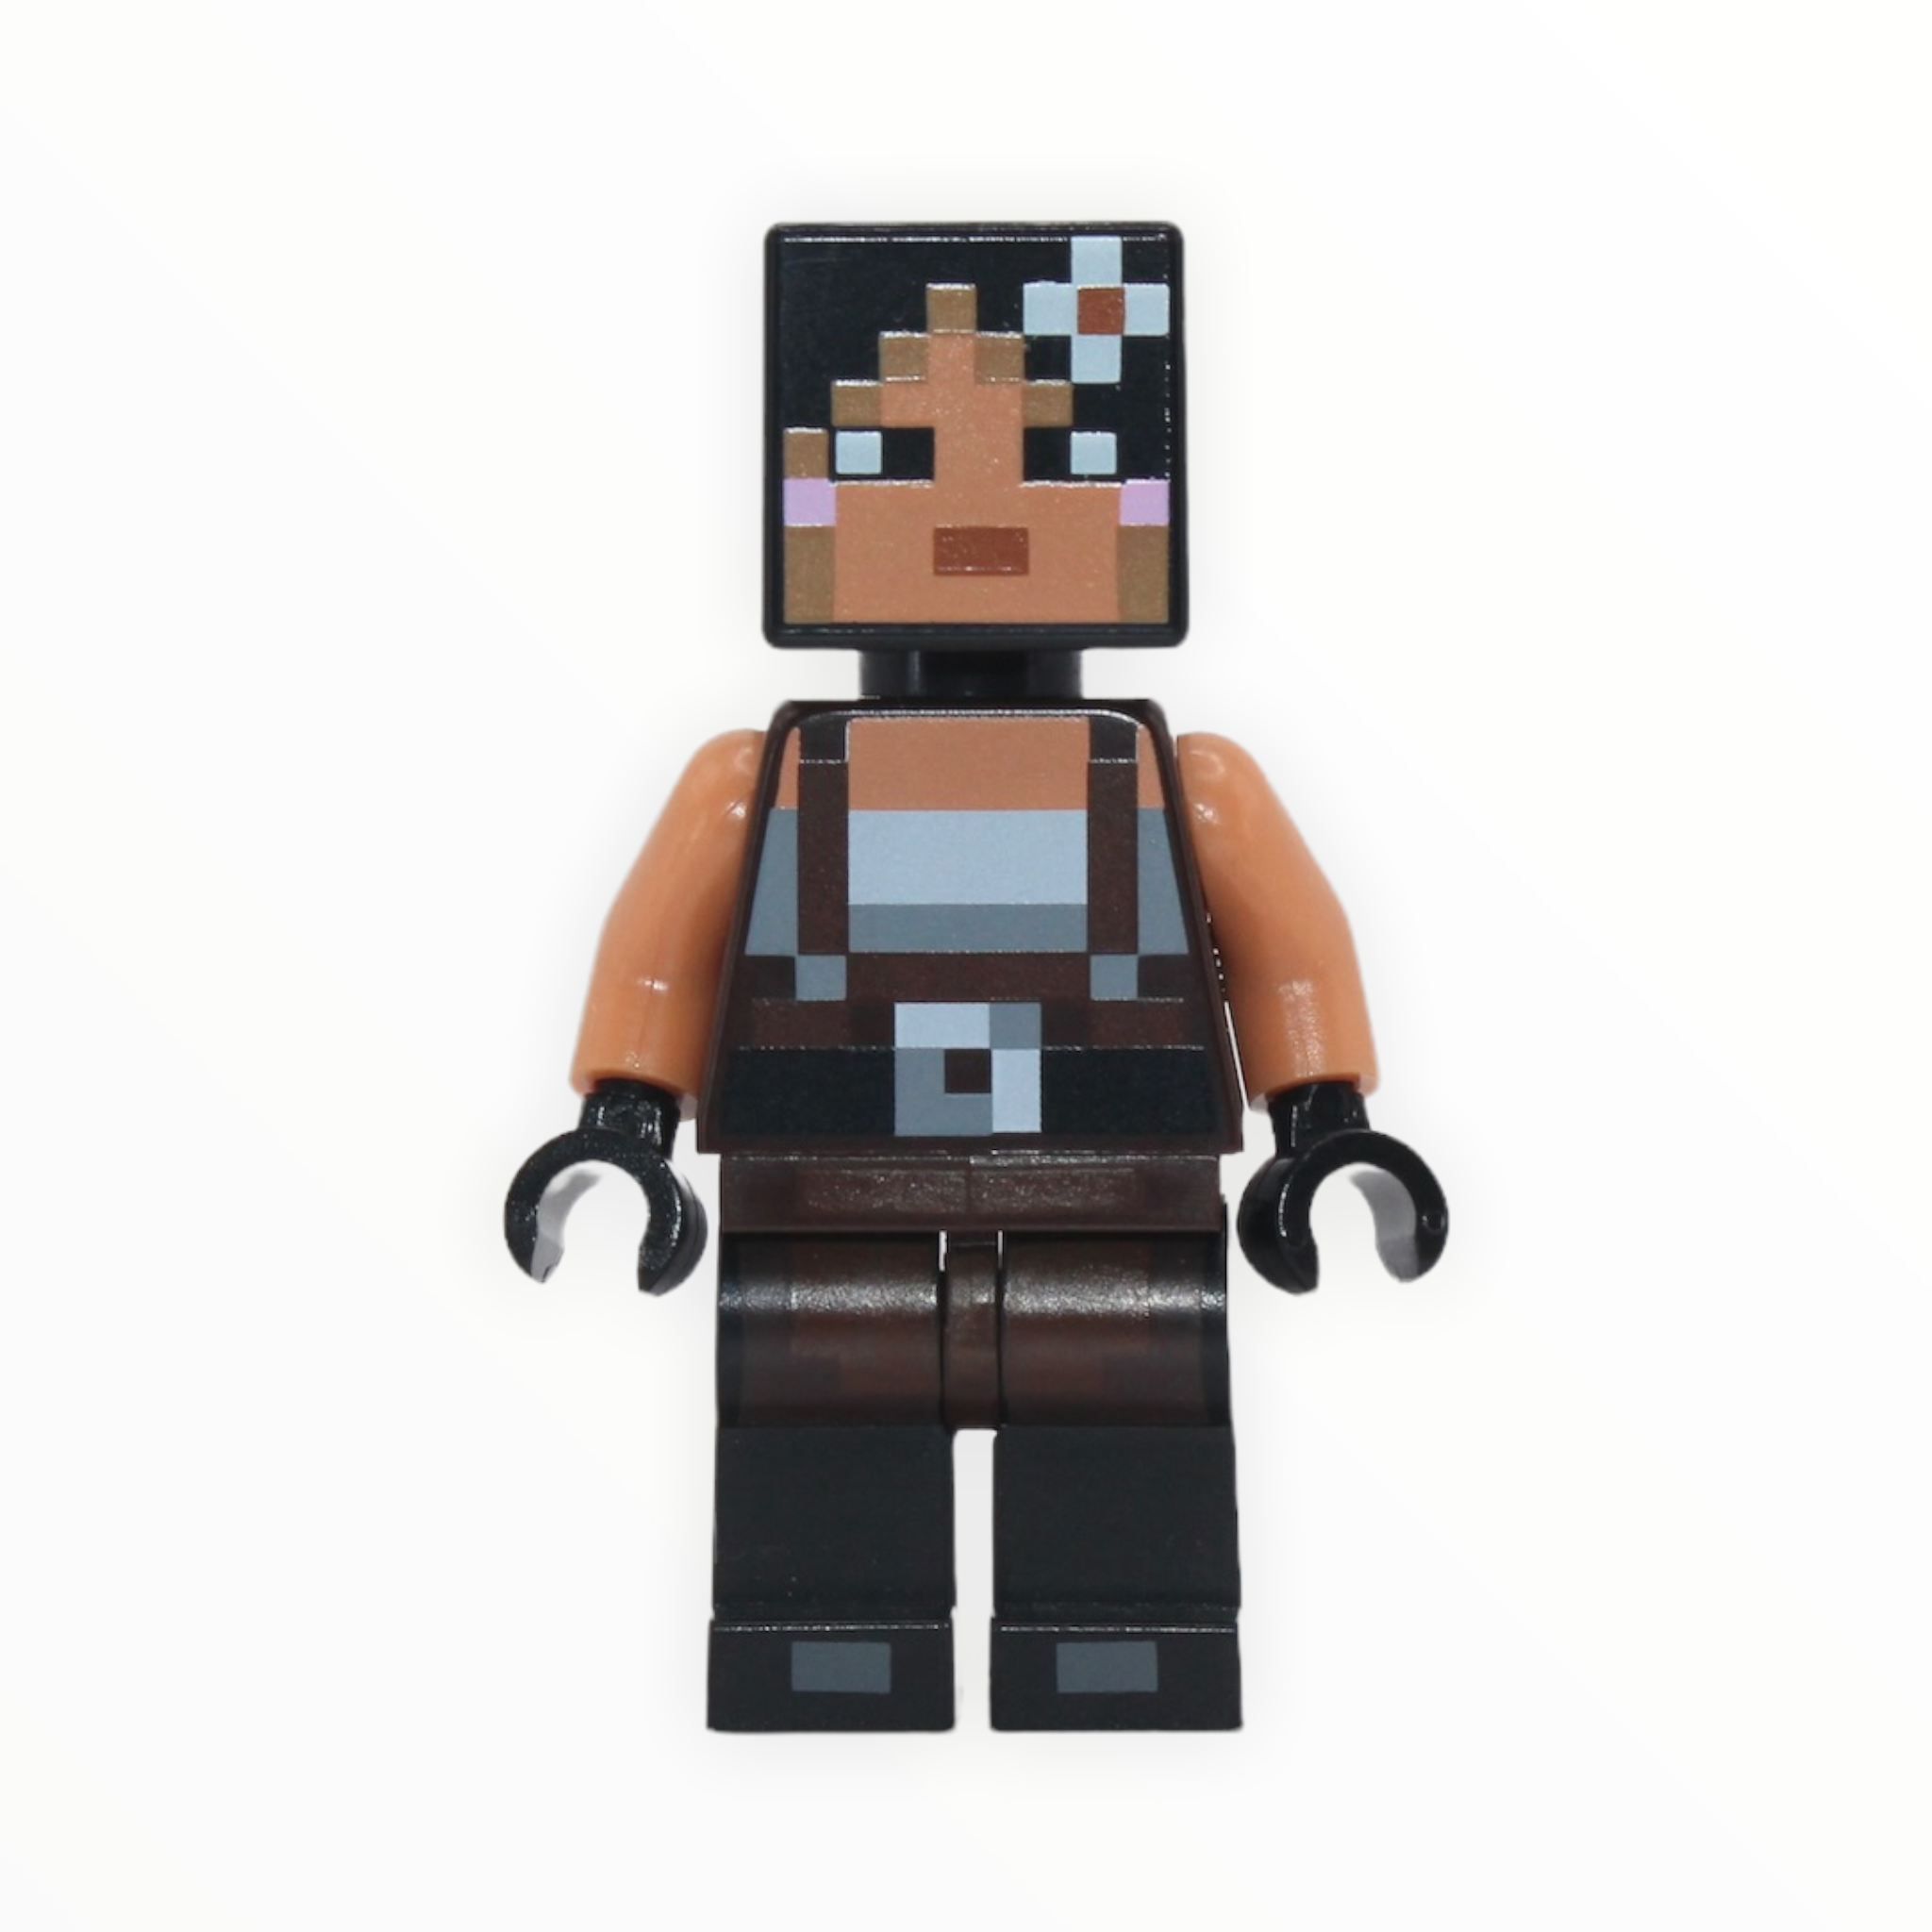 Minecraft Skin 2 (flower in hair, brown overalls/suspenders)